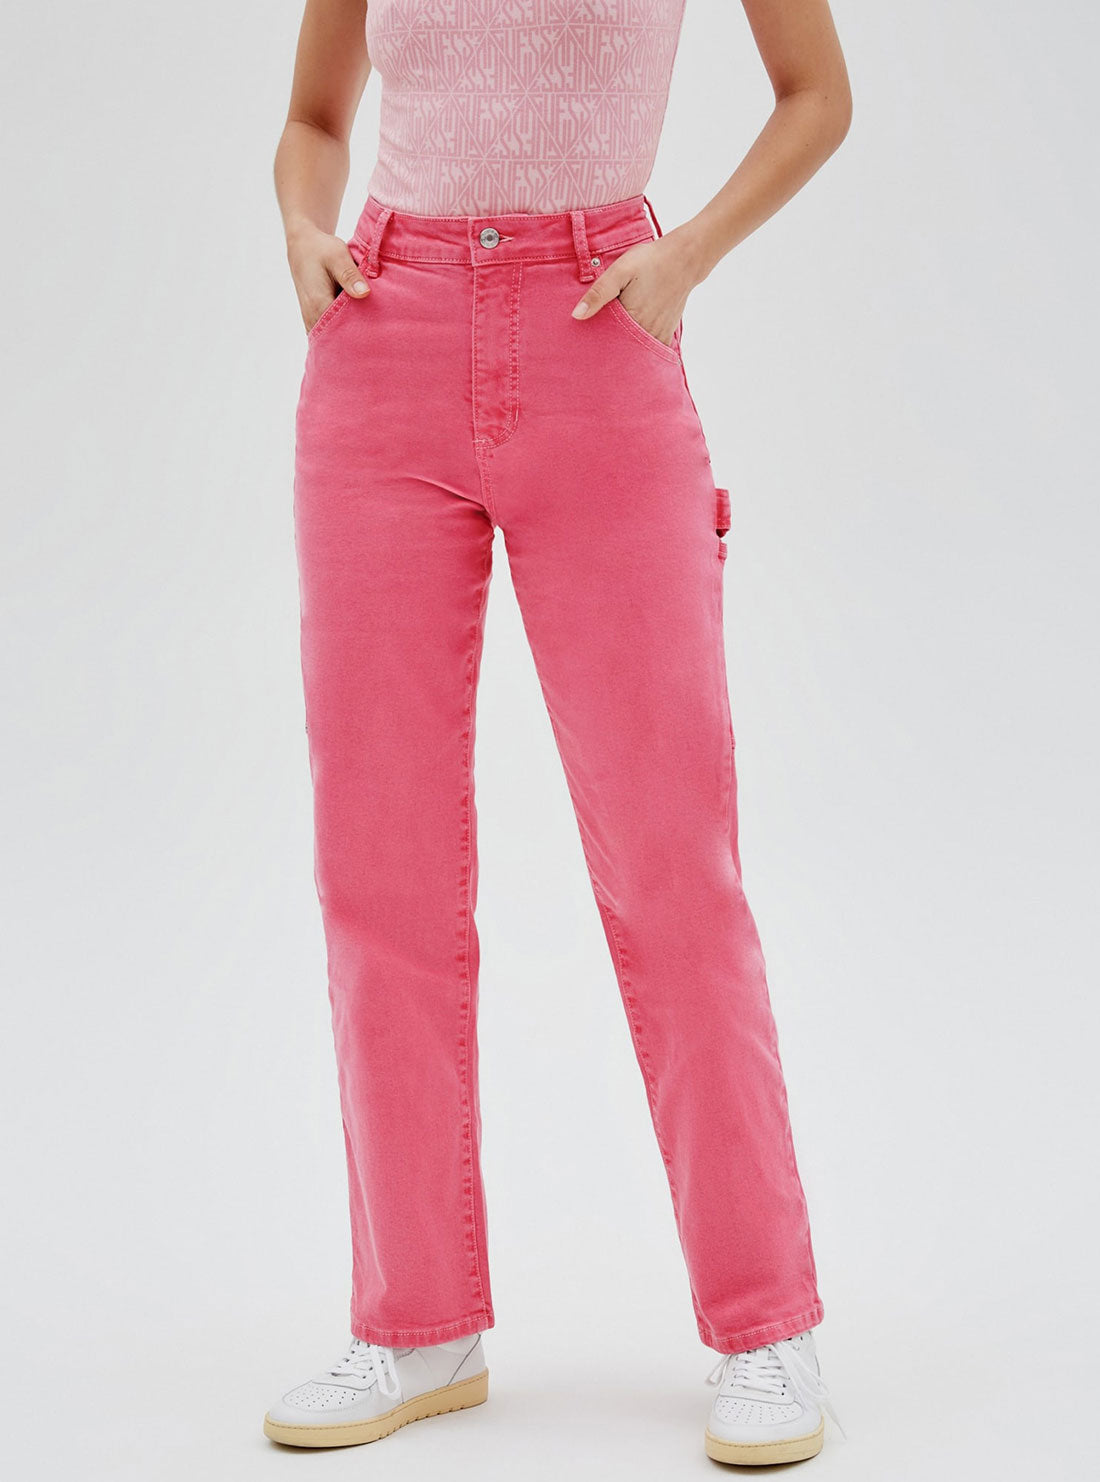 GUESS Womens Guess Originals Pink Rodeo Carpenter Pants W2GG10D4JQ2 Front View